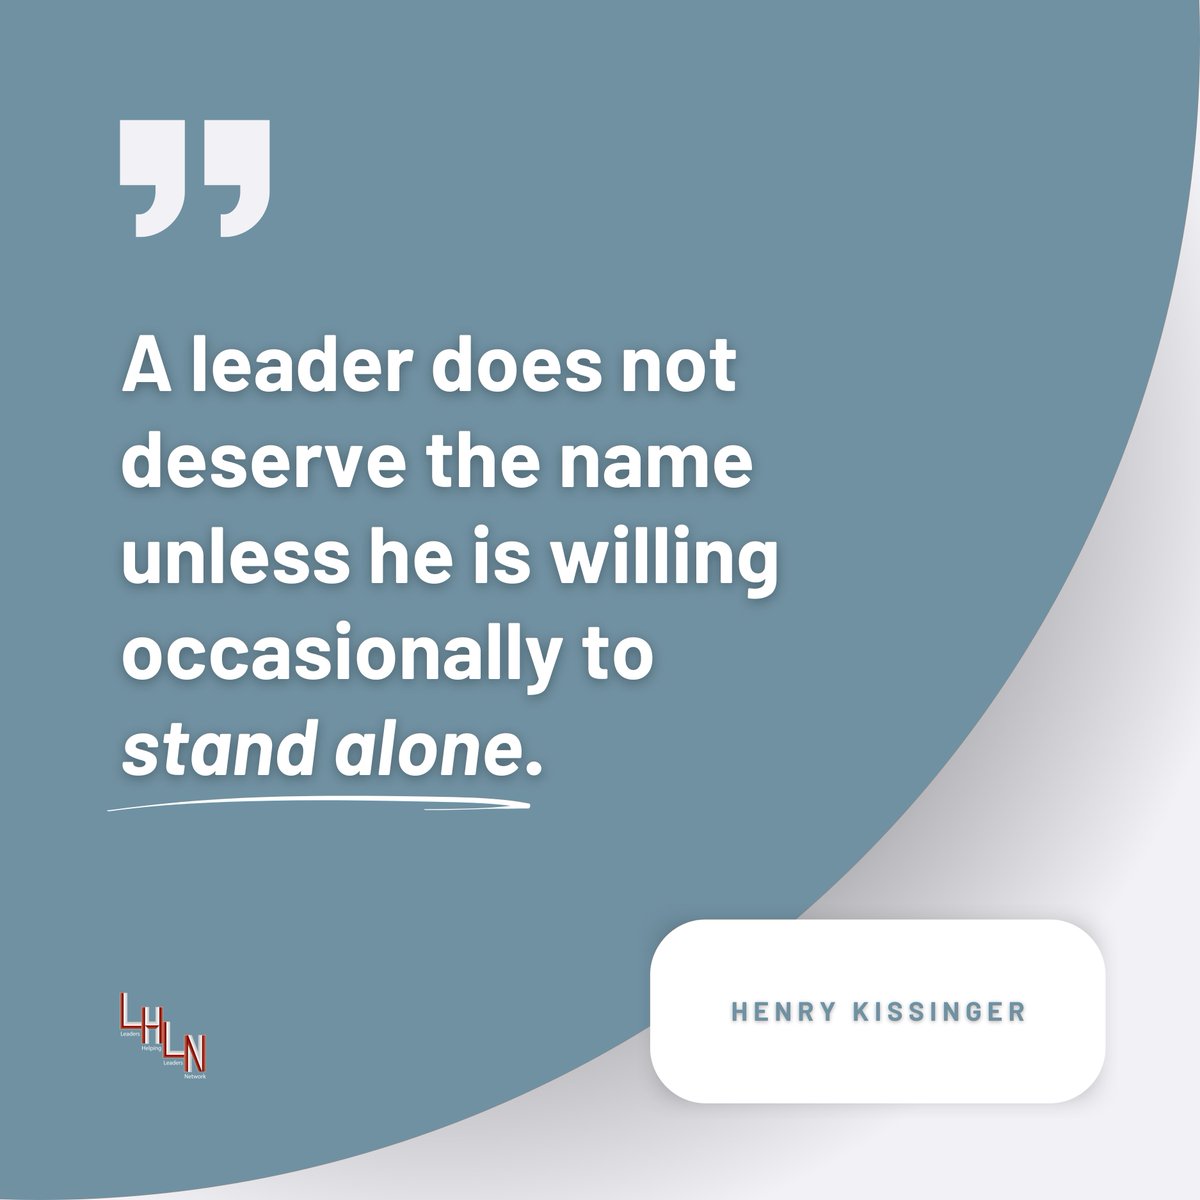 #leader #standalone #leadership #leadershipquote #quote #dailyquote #quoteoftheday #leadershipmatters #leadershipdevelopment